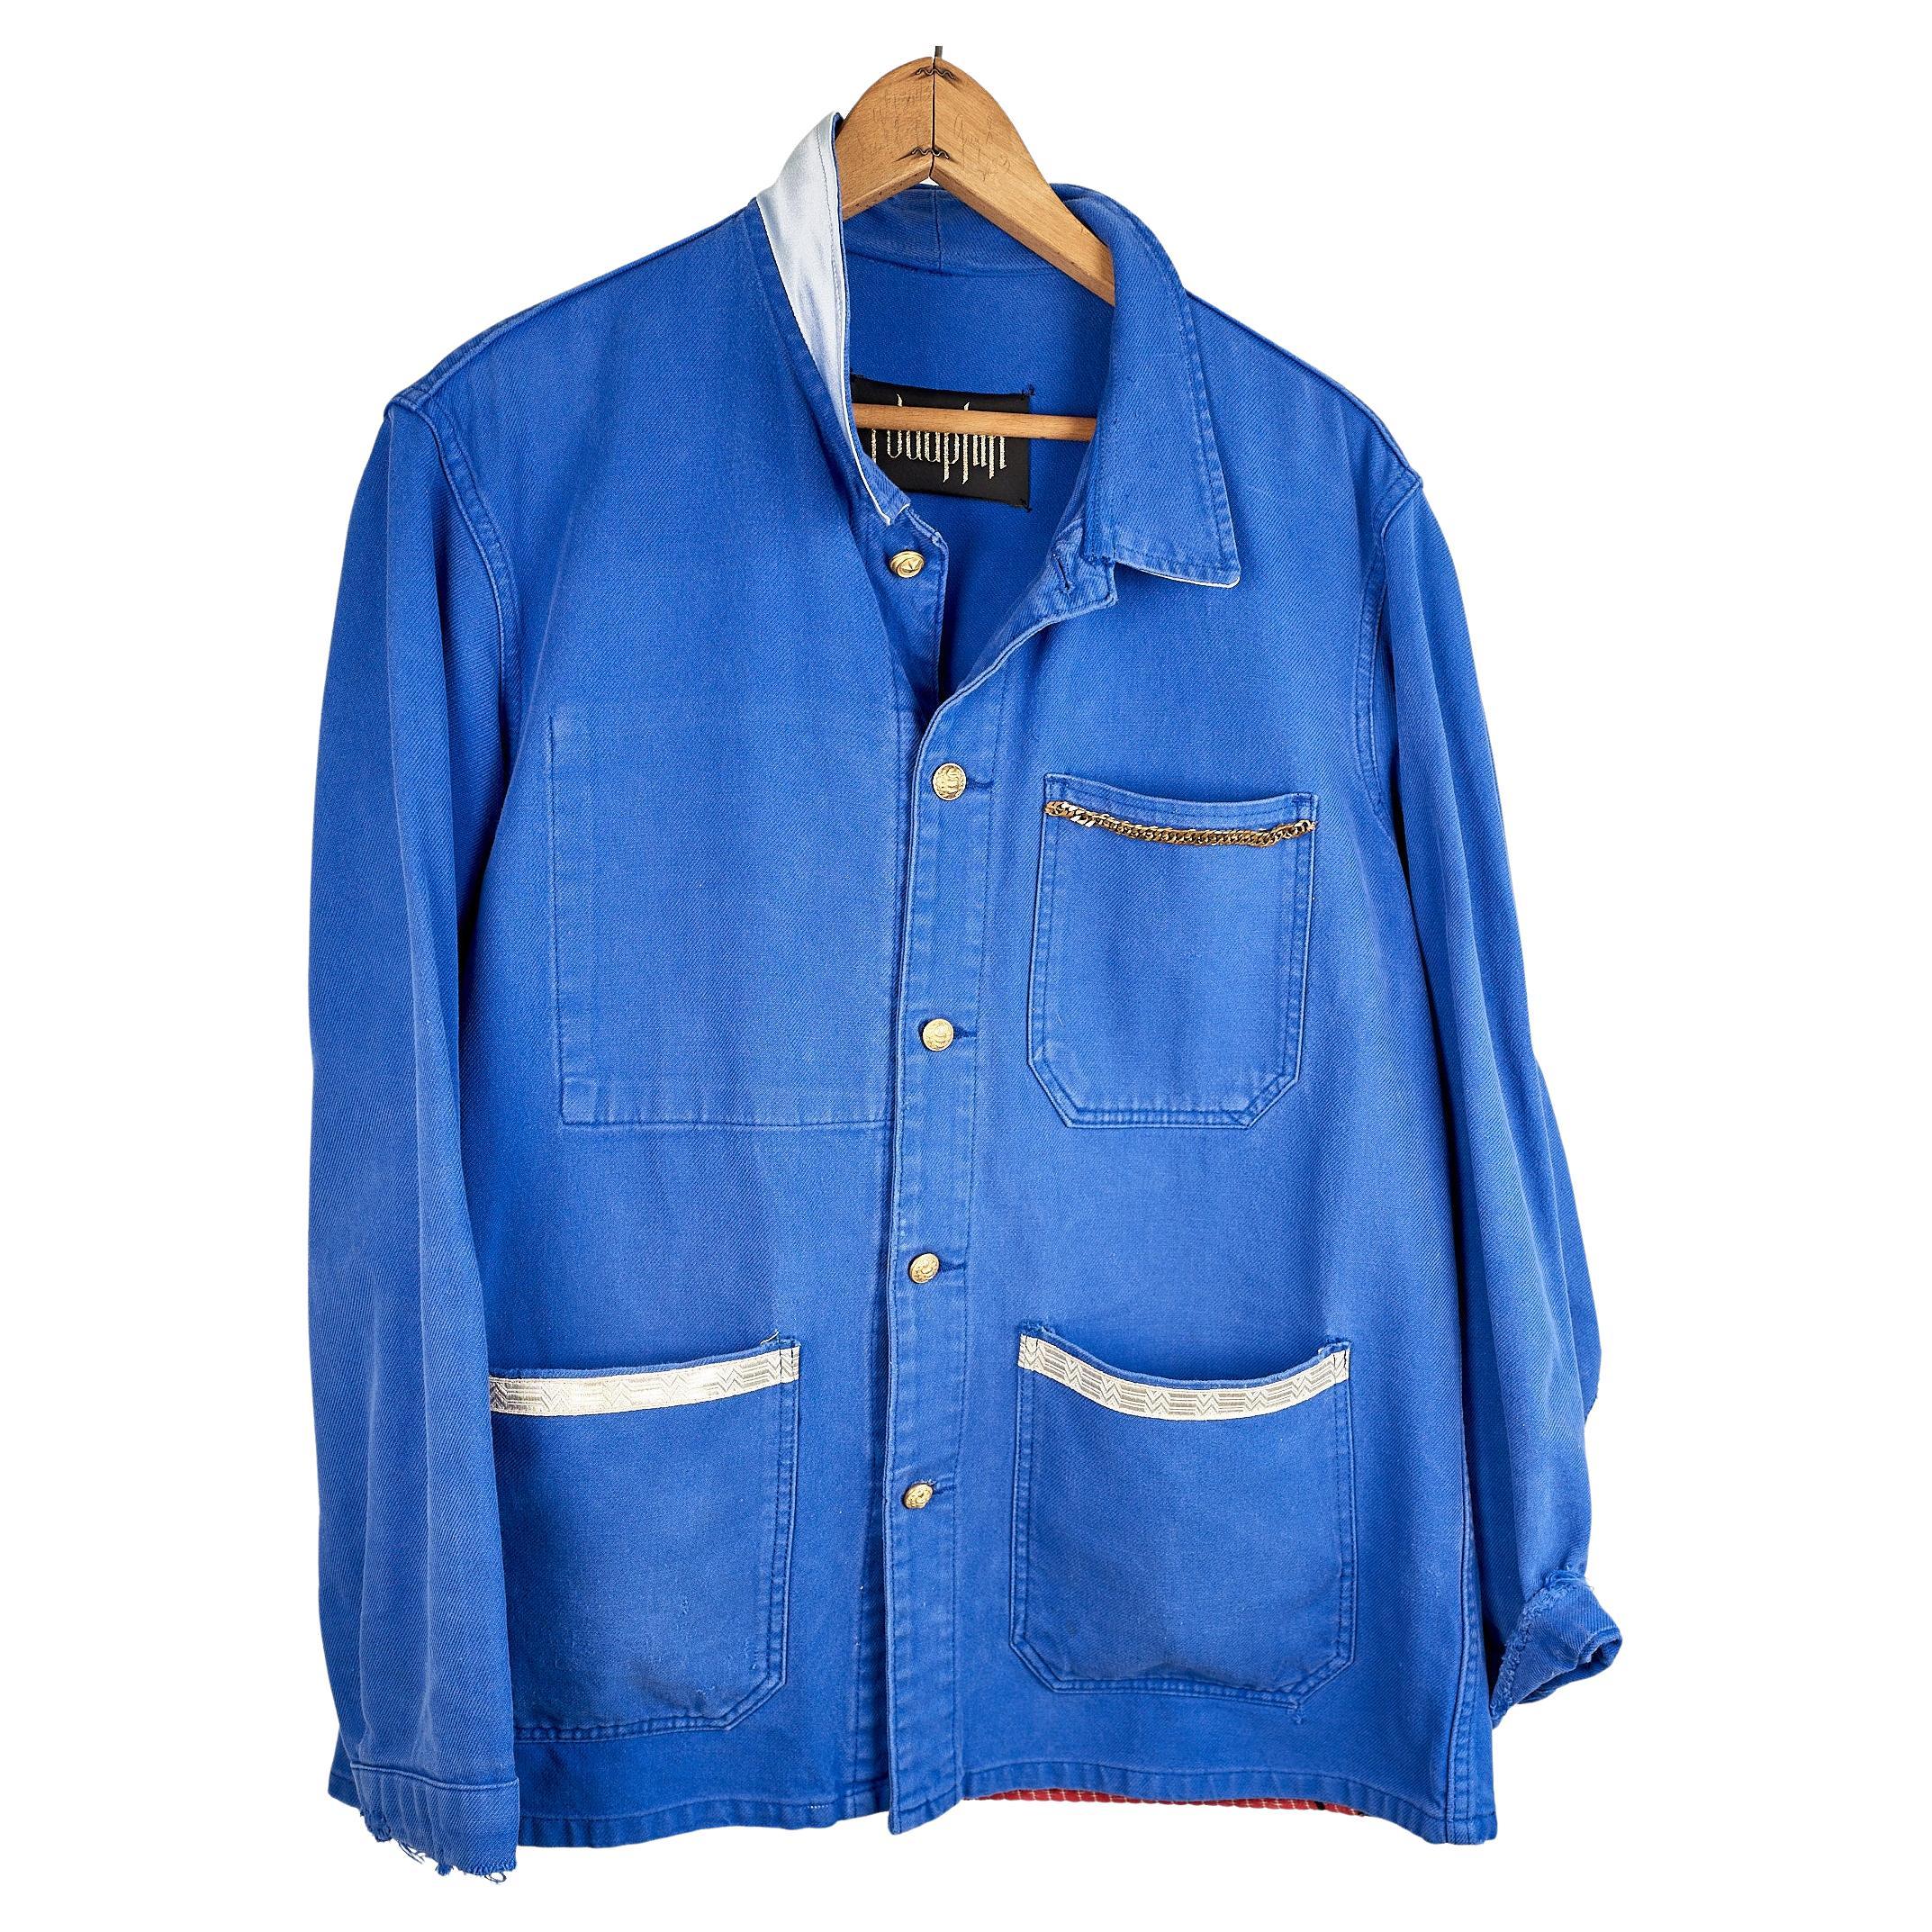 Cobalt Blue Jacket Cotton French Work Wear Tweed Back Silver Chain Braids